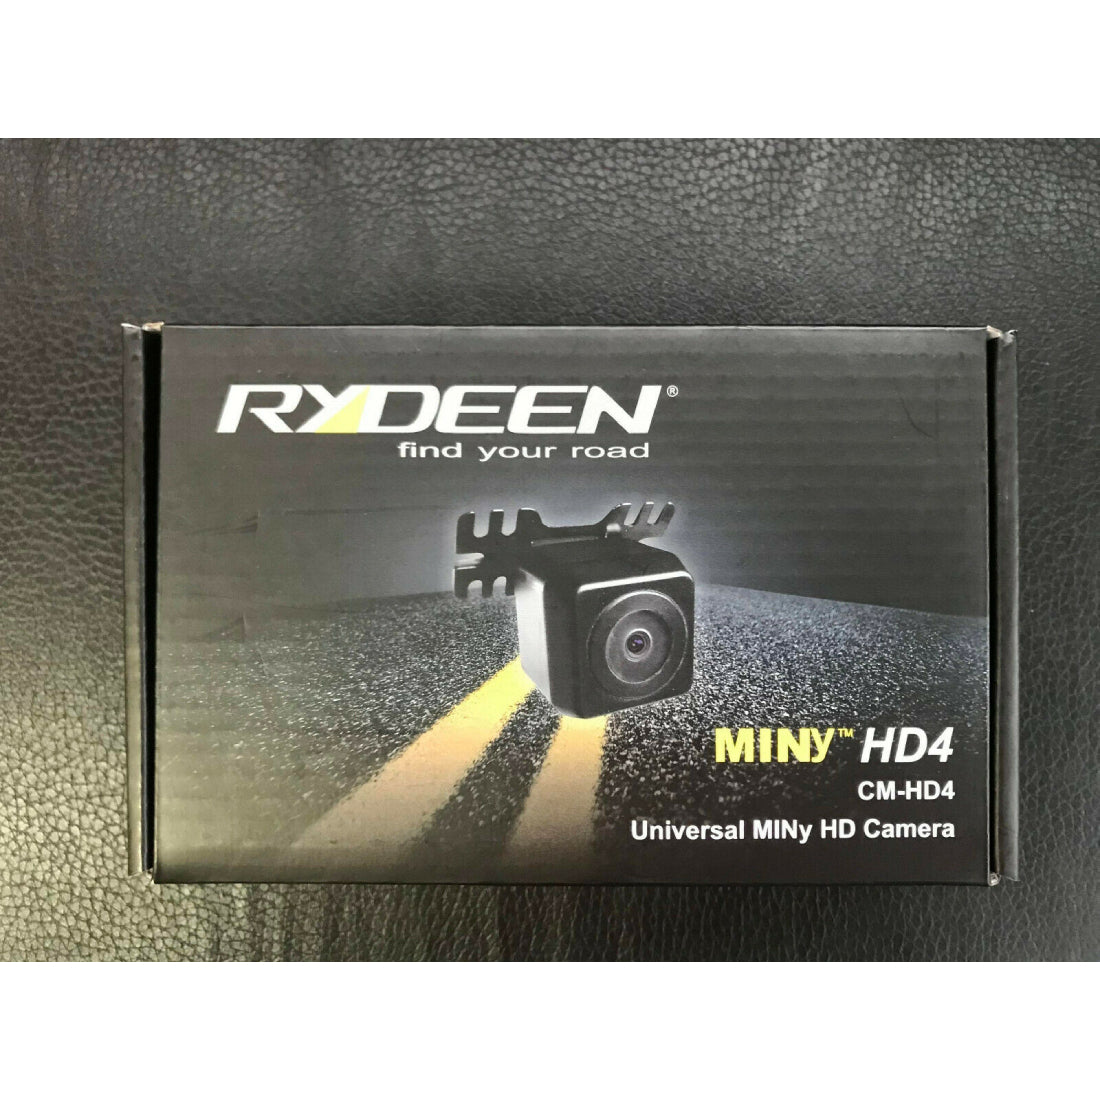 Rydeen CM-HD4 Backup/Forward Facing MINy Camera with HD CMOS II Lens 960 Lines